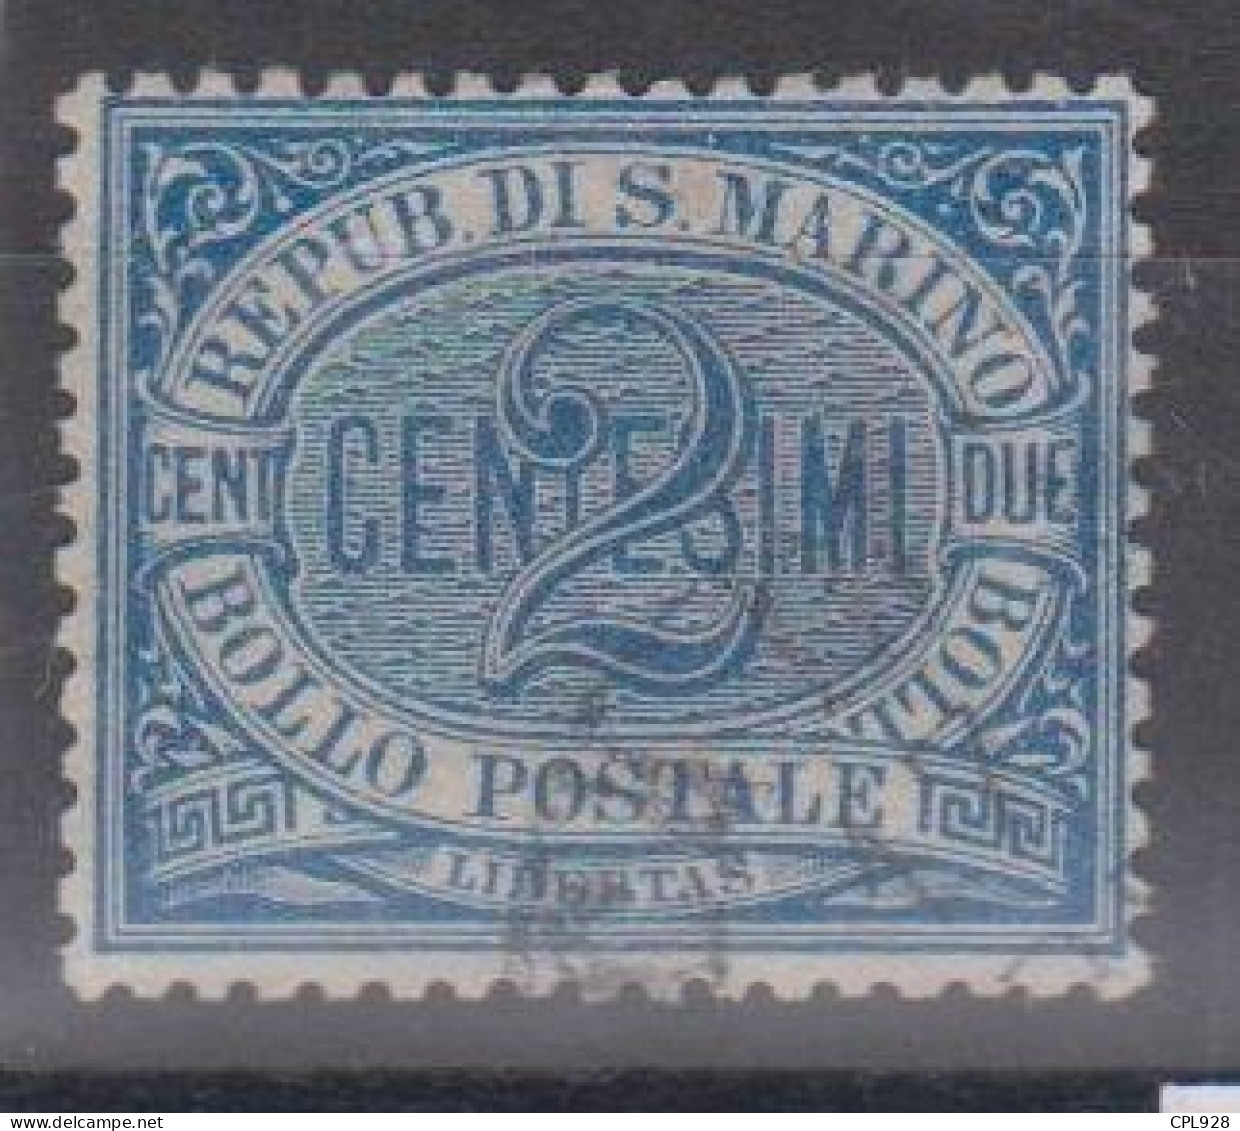 San Marin N°12 - Used Stamps